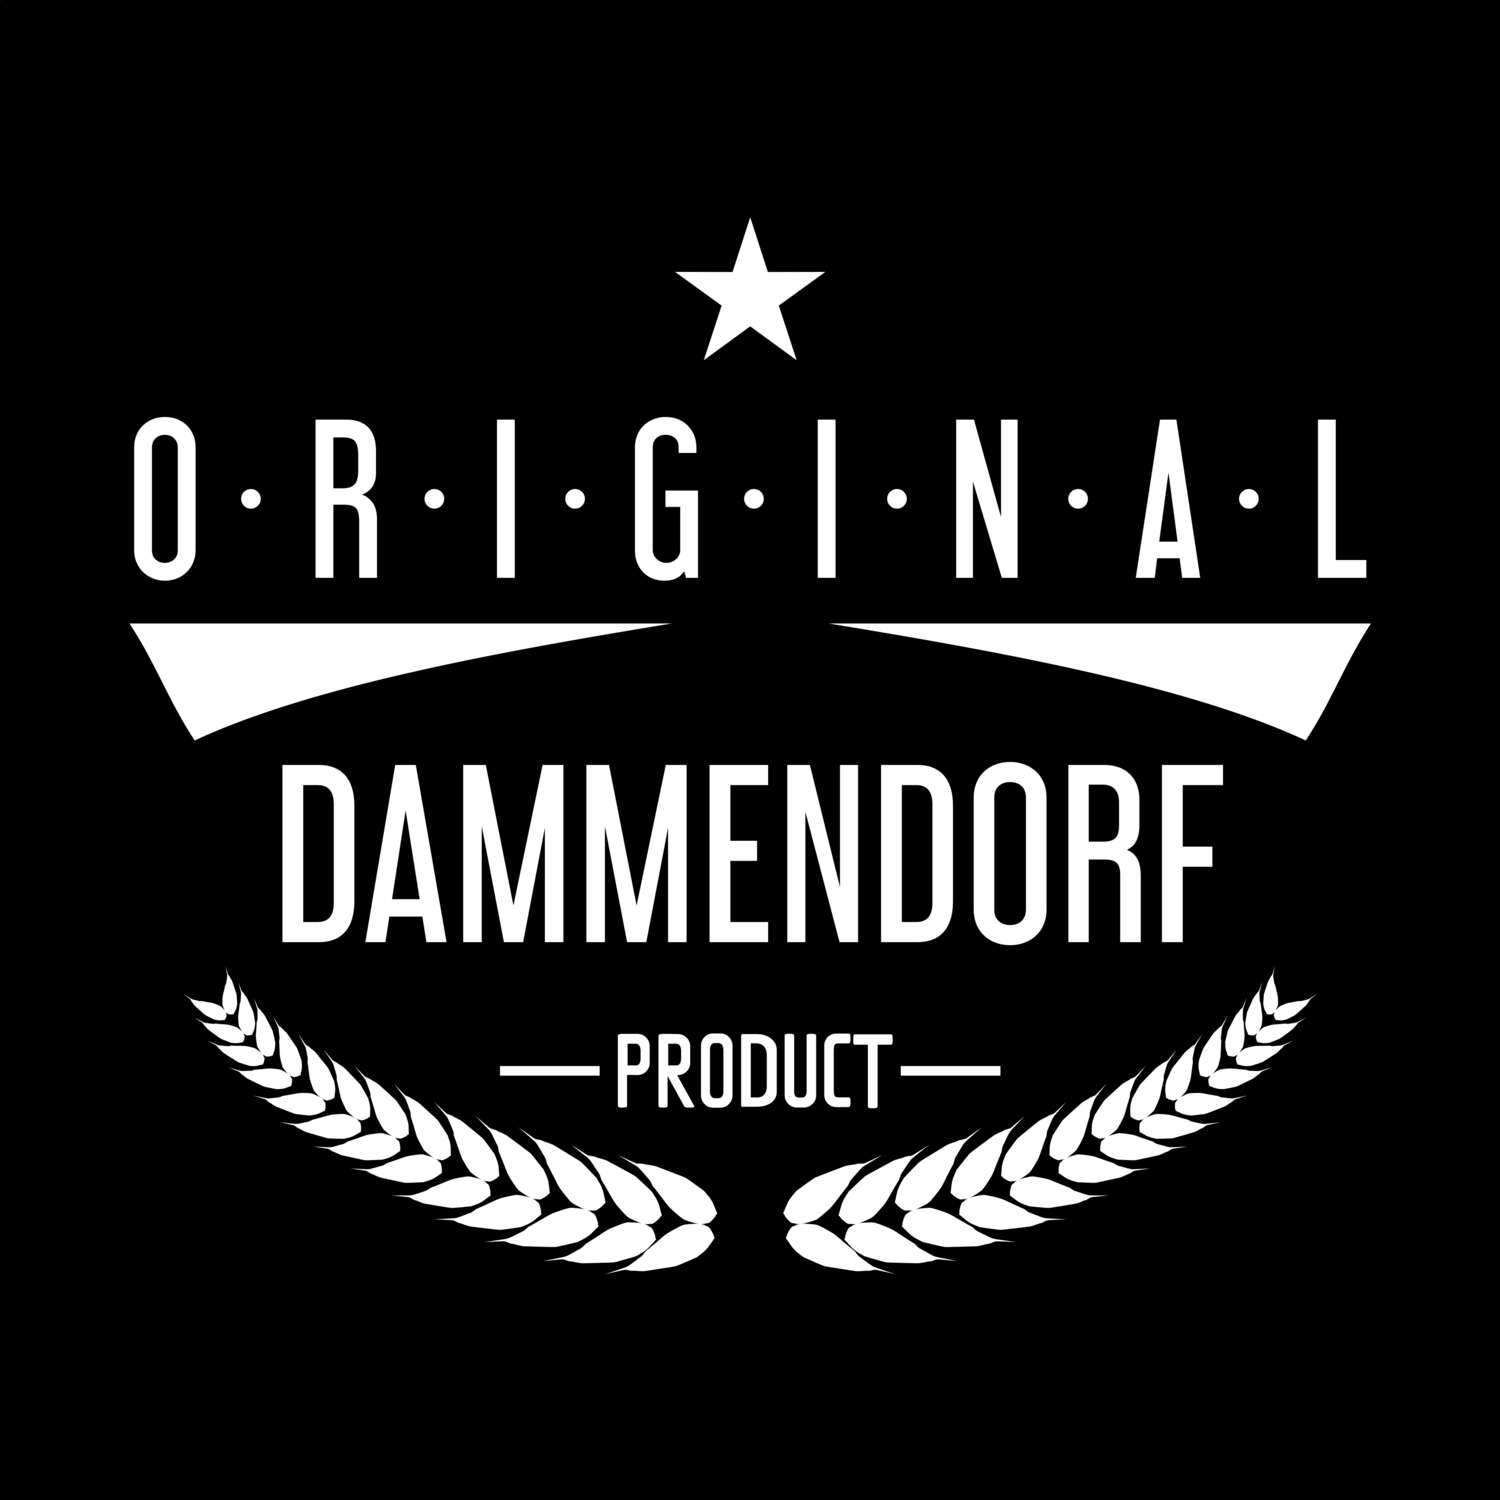 Dammendorf T-Shirt »Original Product«